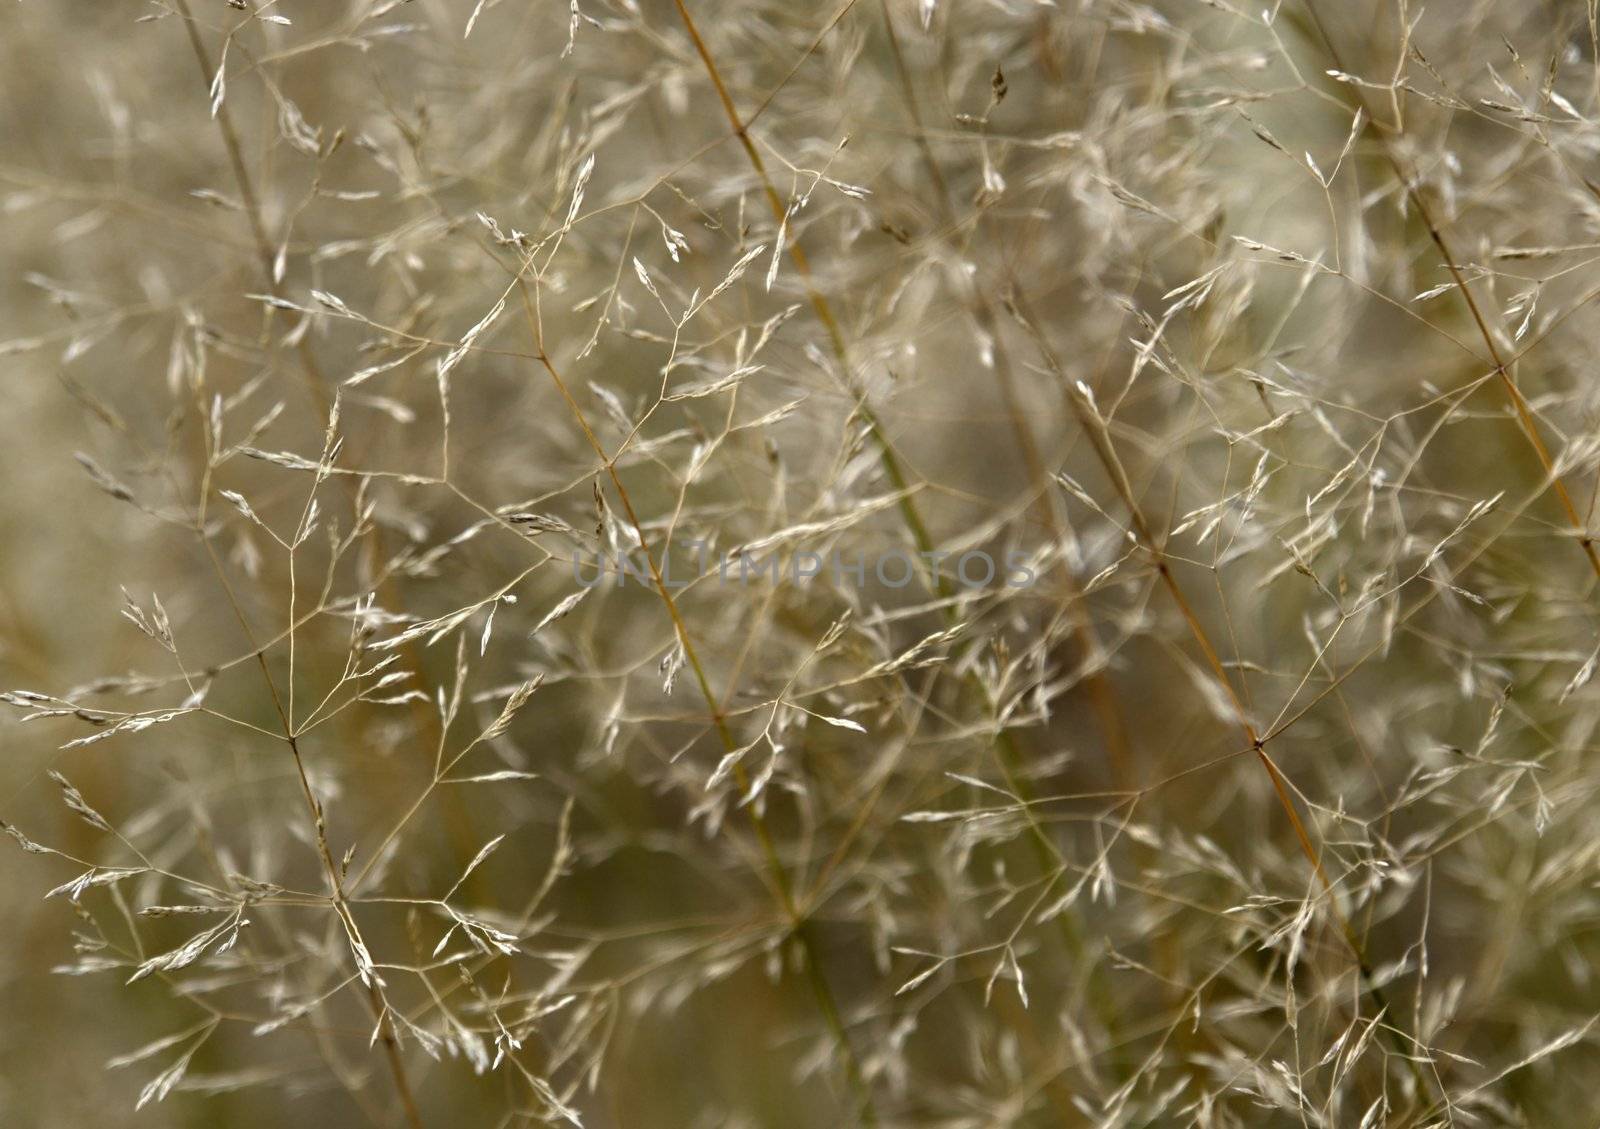 sere filigree grass detail by gewoldi